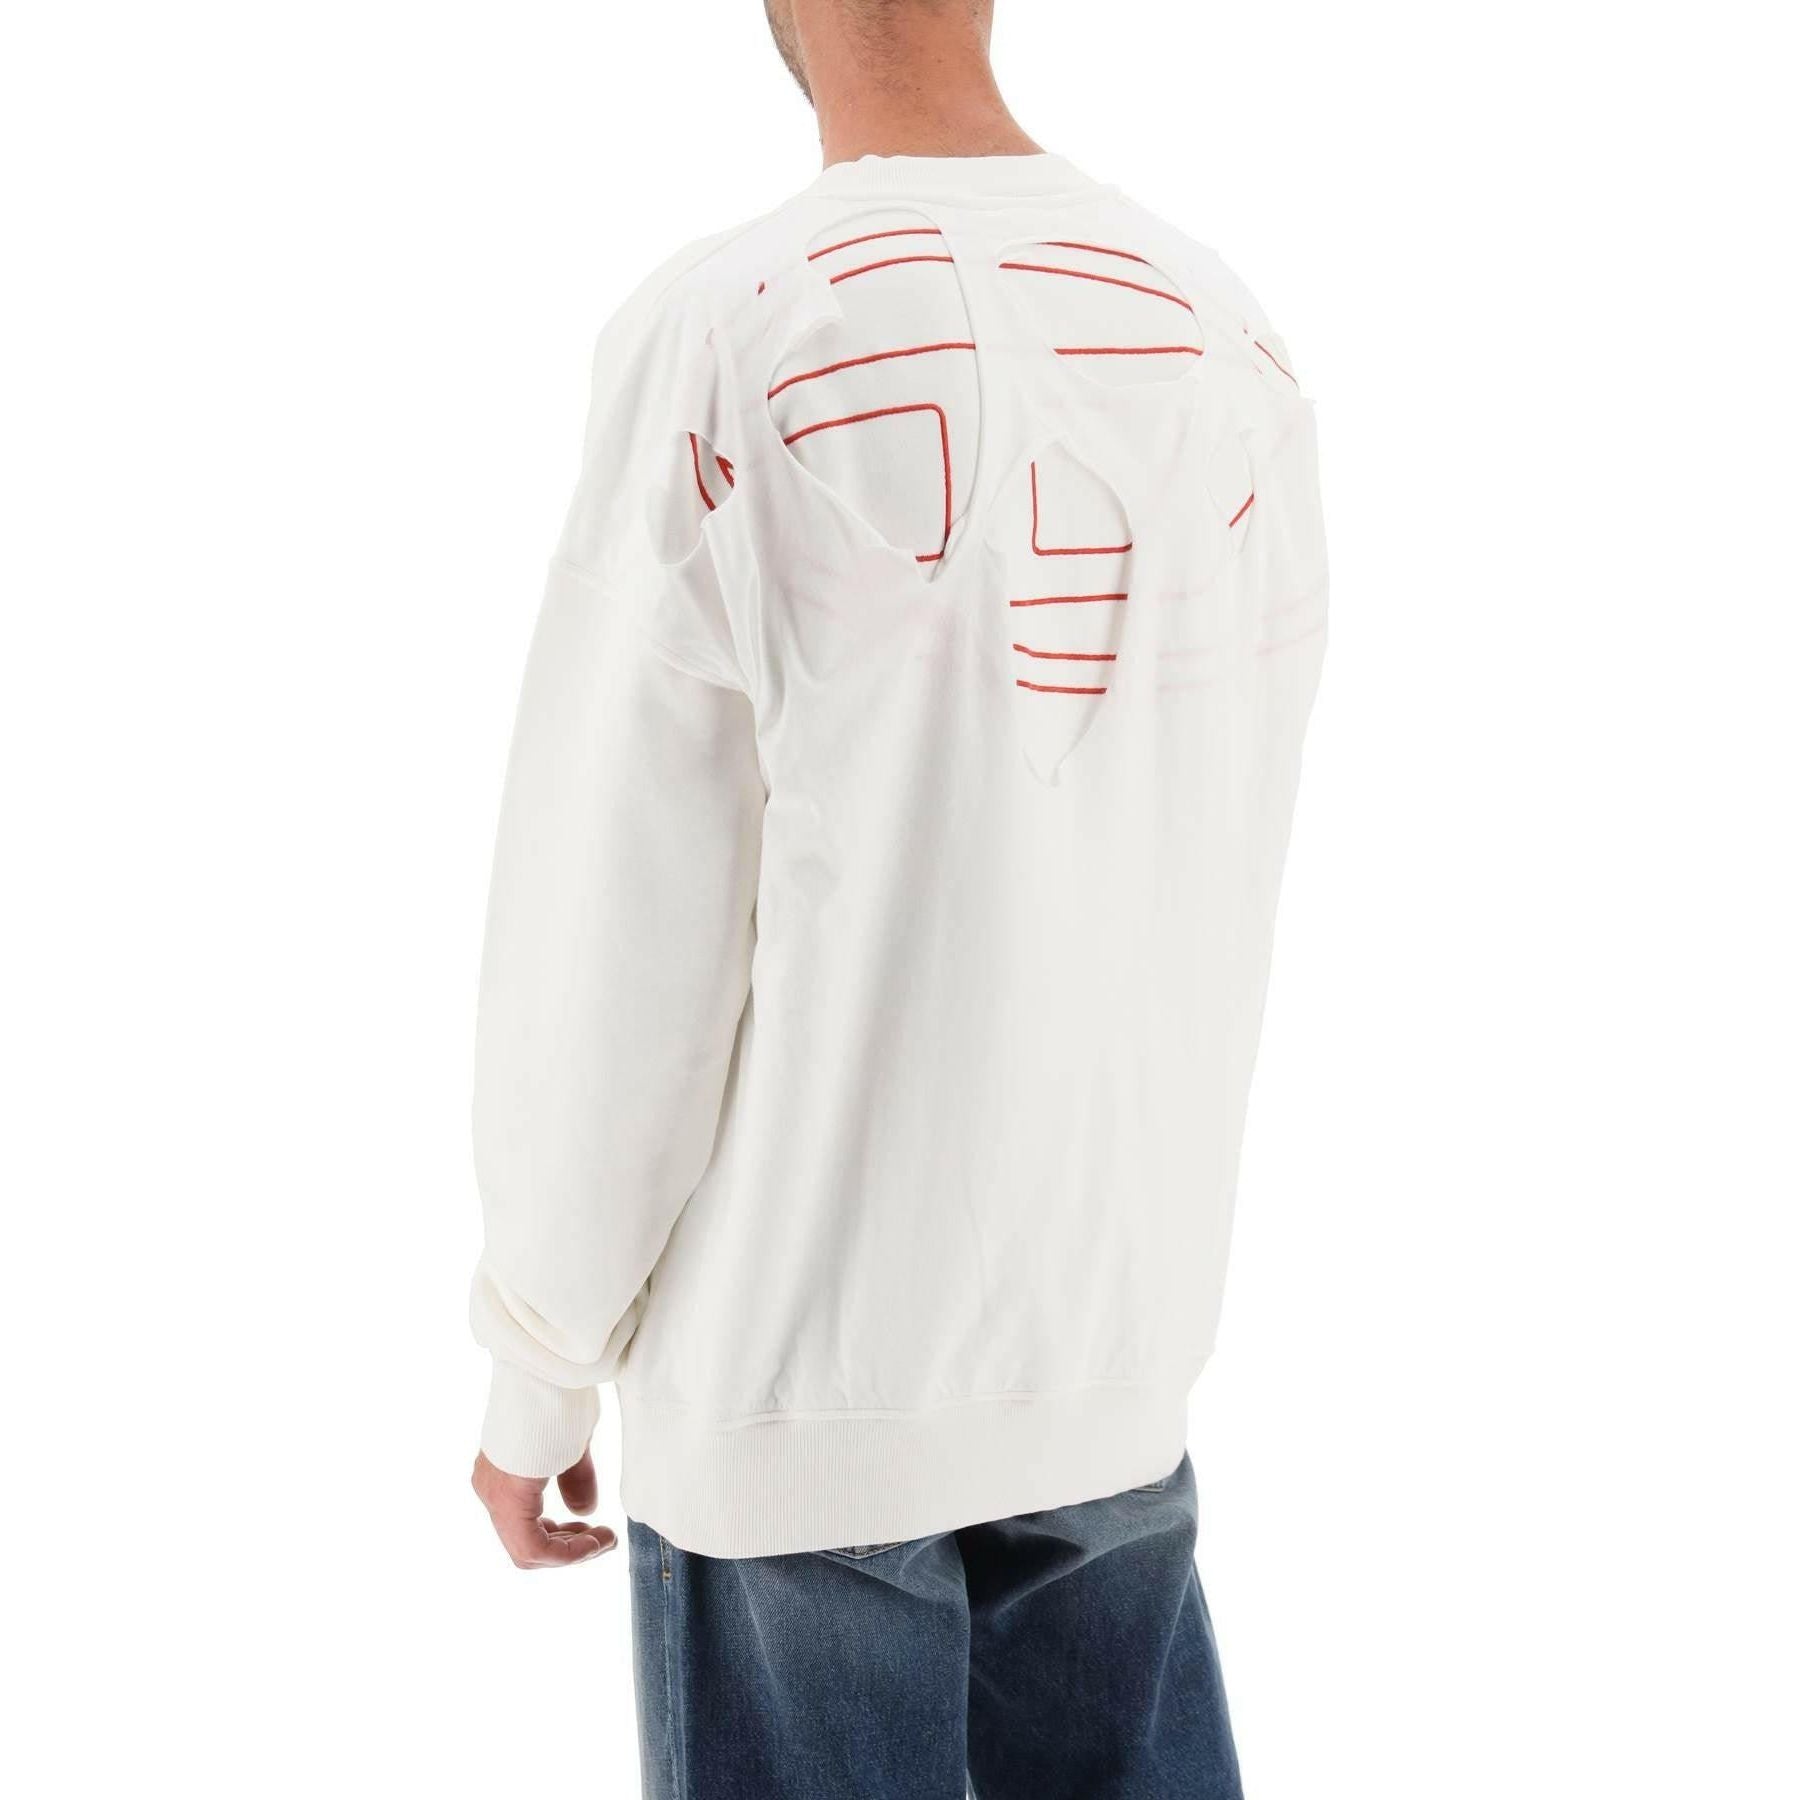 S Strapoval' Sweatshirt With Back Destroyed Effect Logo DIESEL JOHN JULIA.